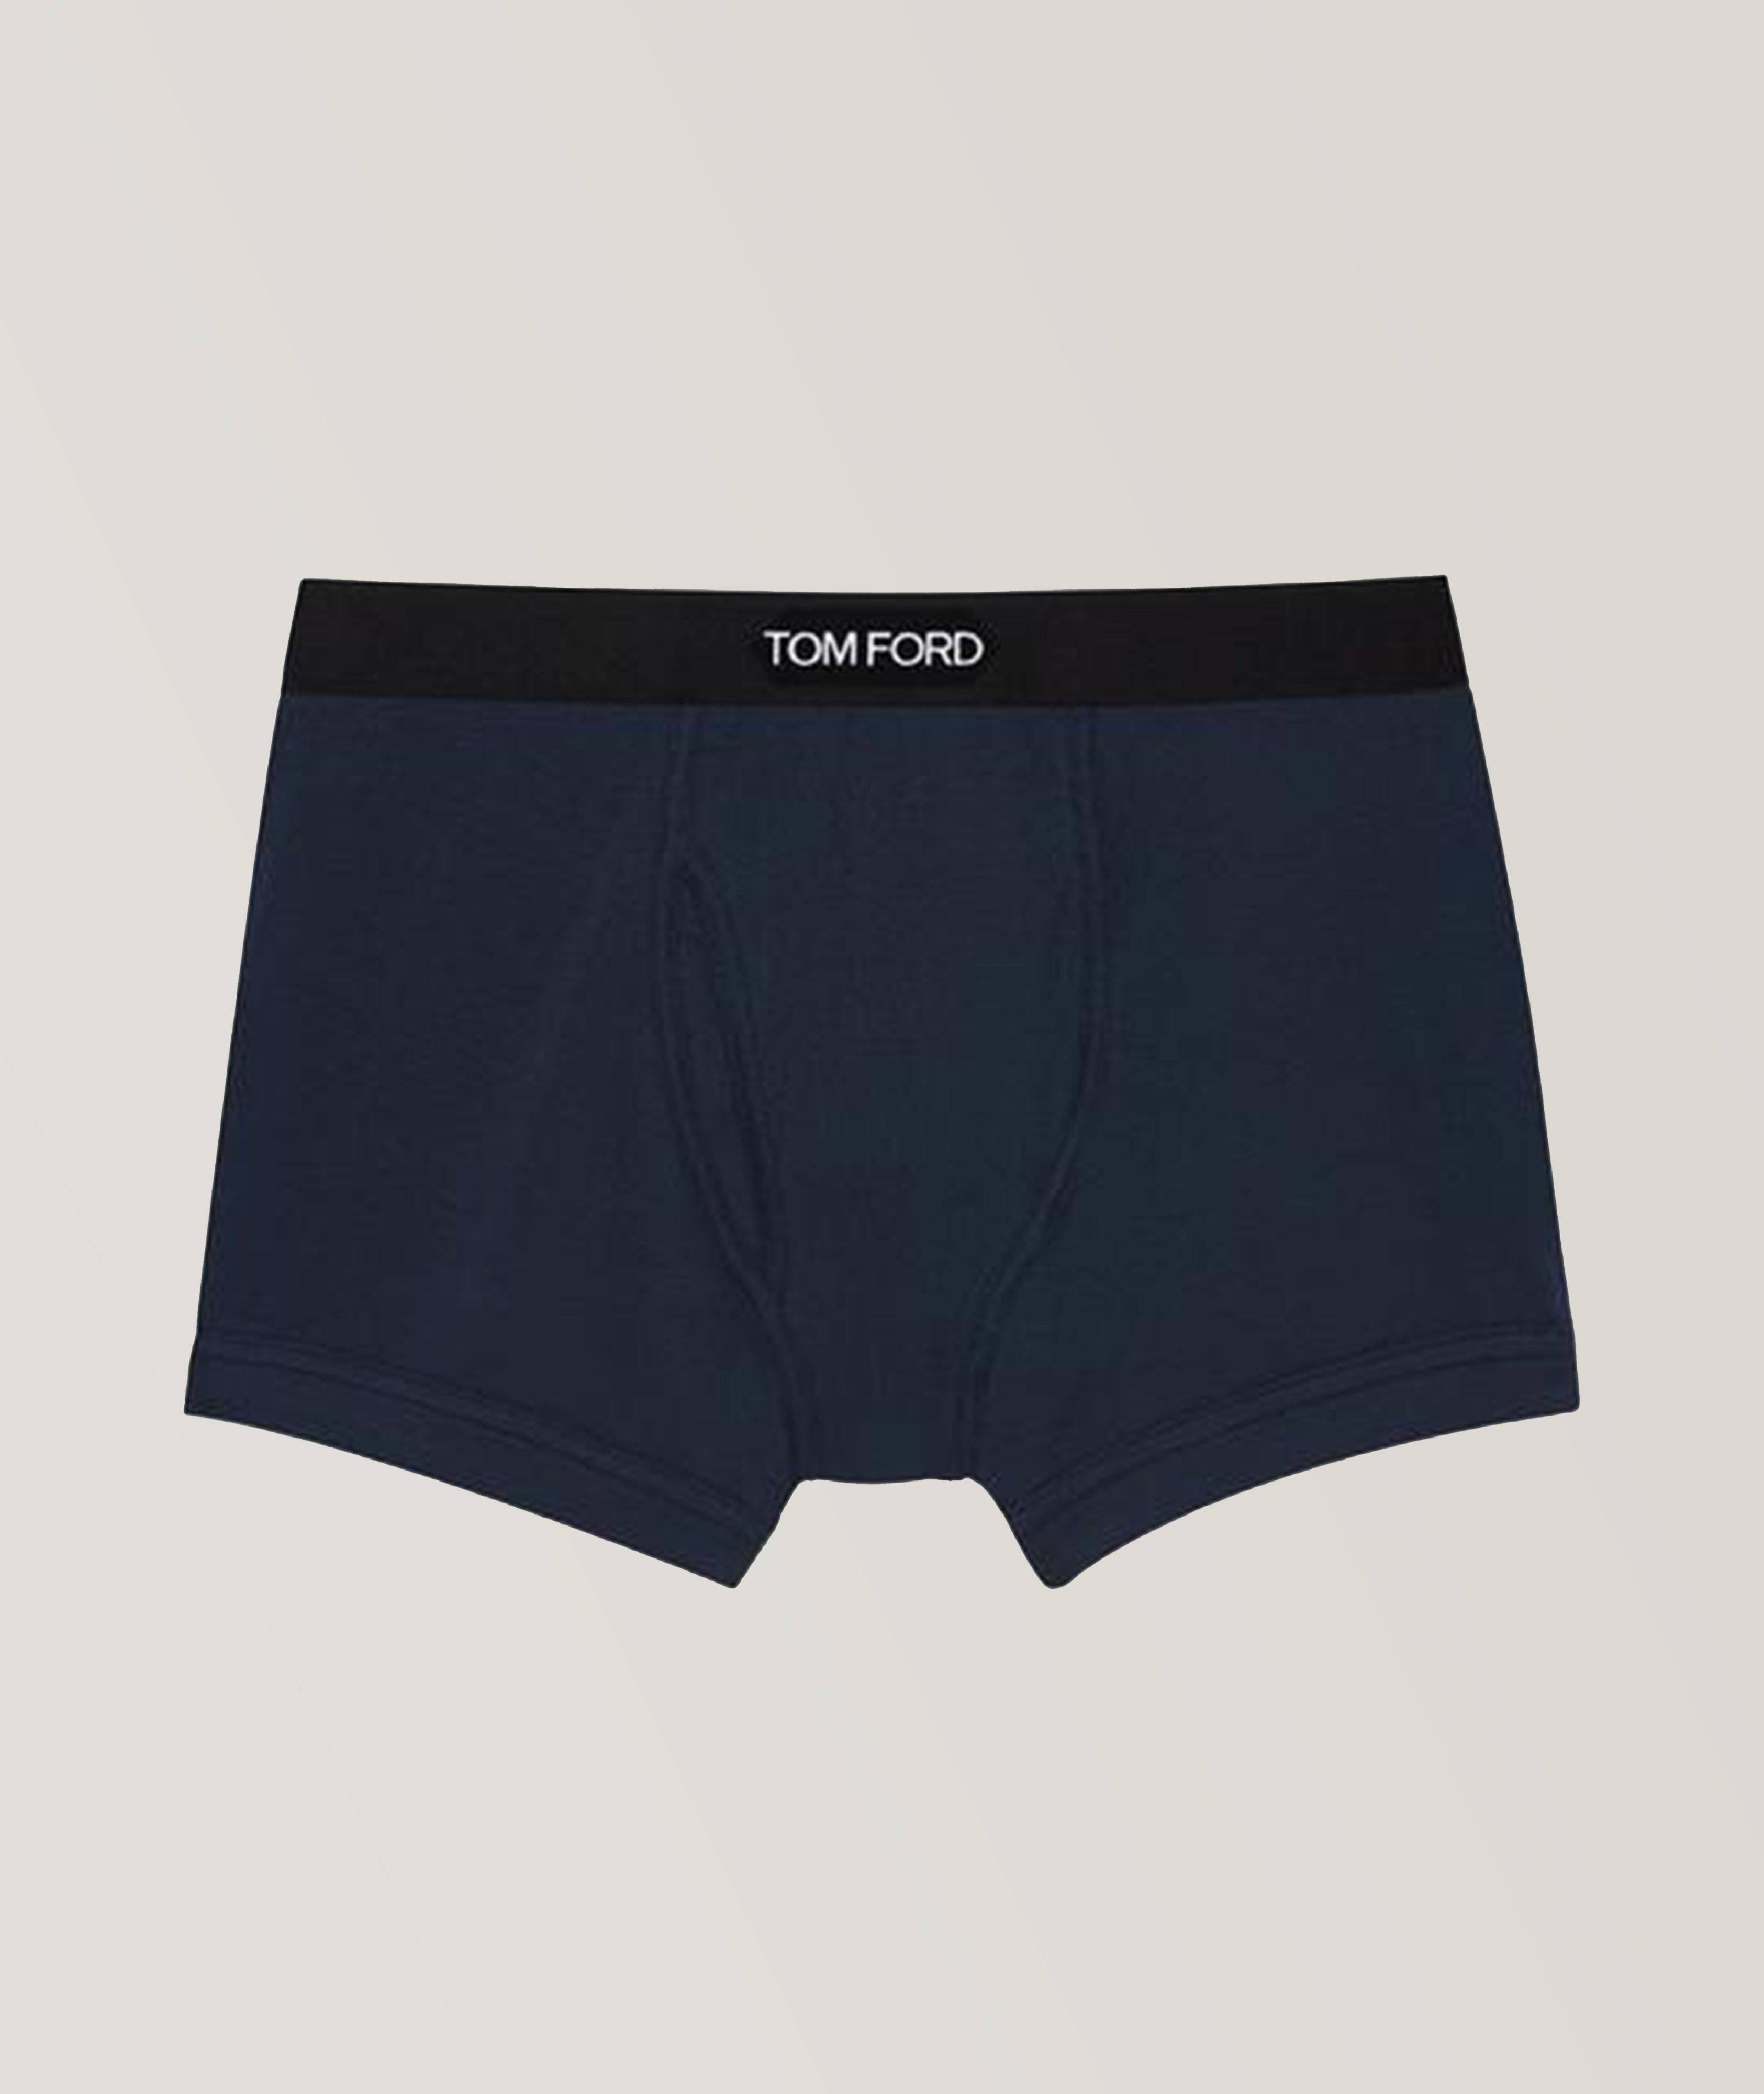 PINK HERO New Boxers Features Ocean style Print Men's Boxer Shorts Underwear  Couple Boxer Shorts Brand Manufacturers M L XL XXL